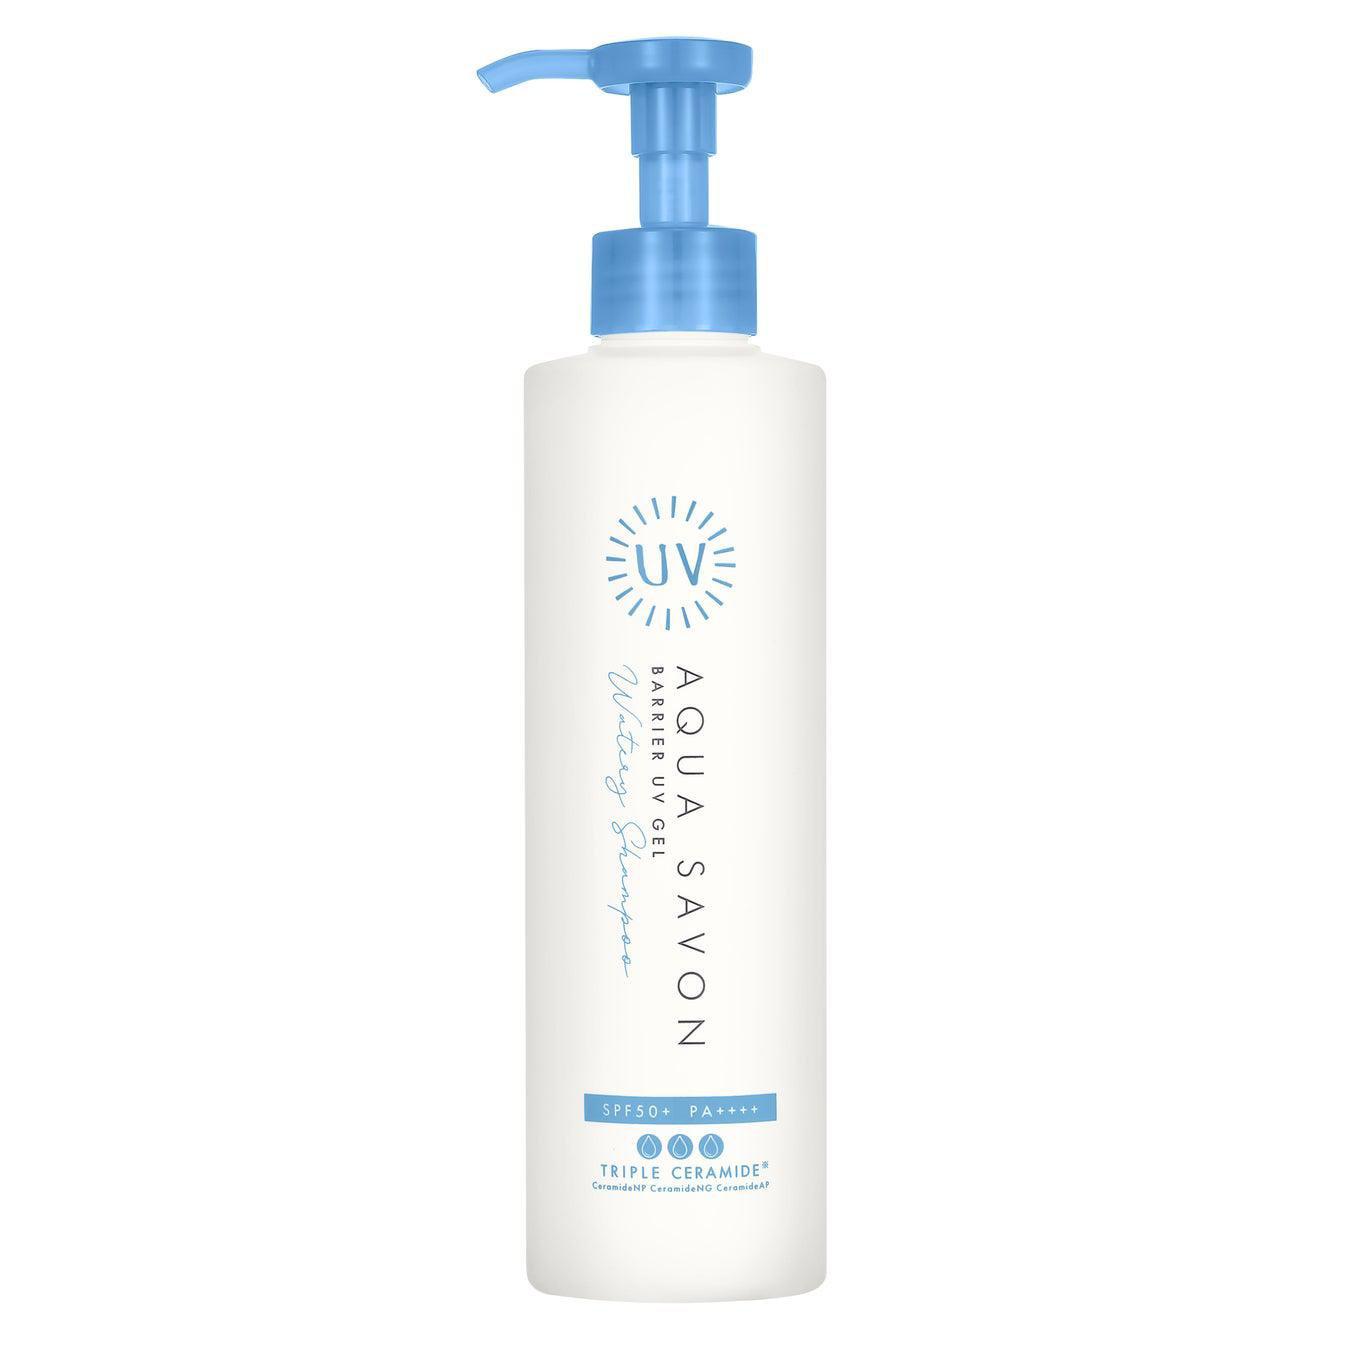 Aqua Savon Triple Ceramide Barrier UV Gel Sunscreen SPF50+ PA++++ 200g - YOYO JAPAN